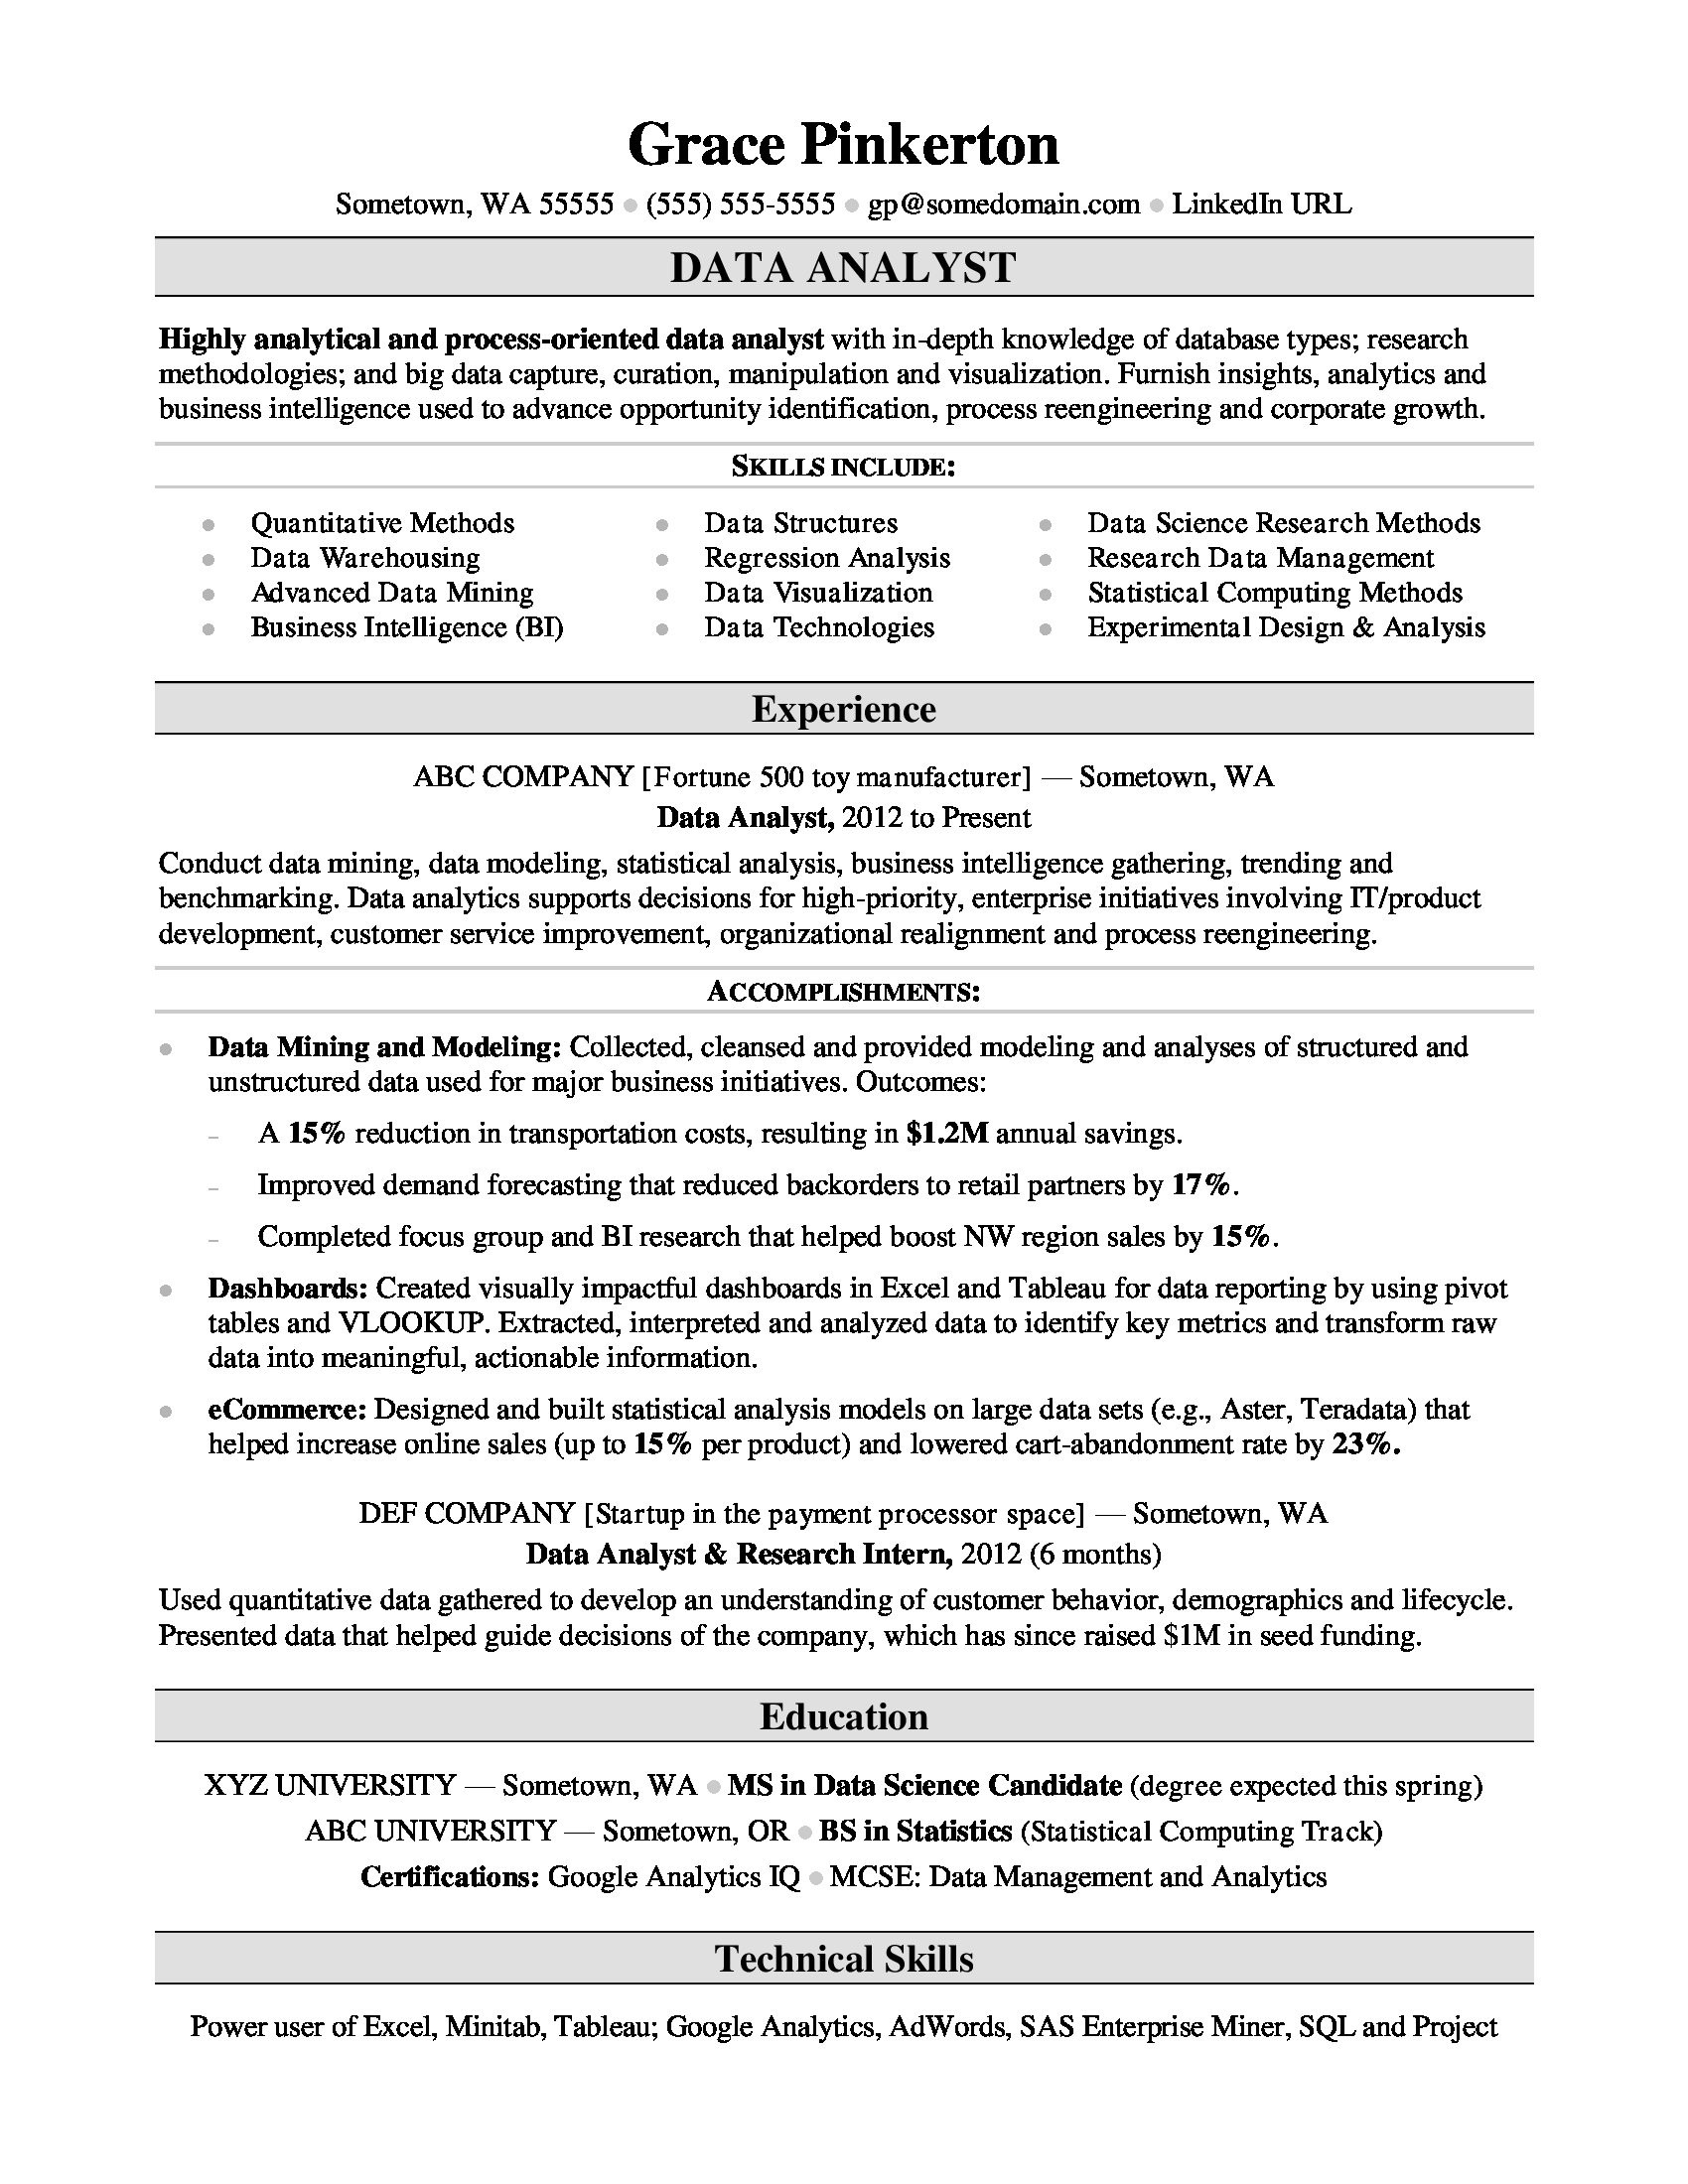 Sample Resume for Experienced Data Analyst Data Analyst Resume Sample